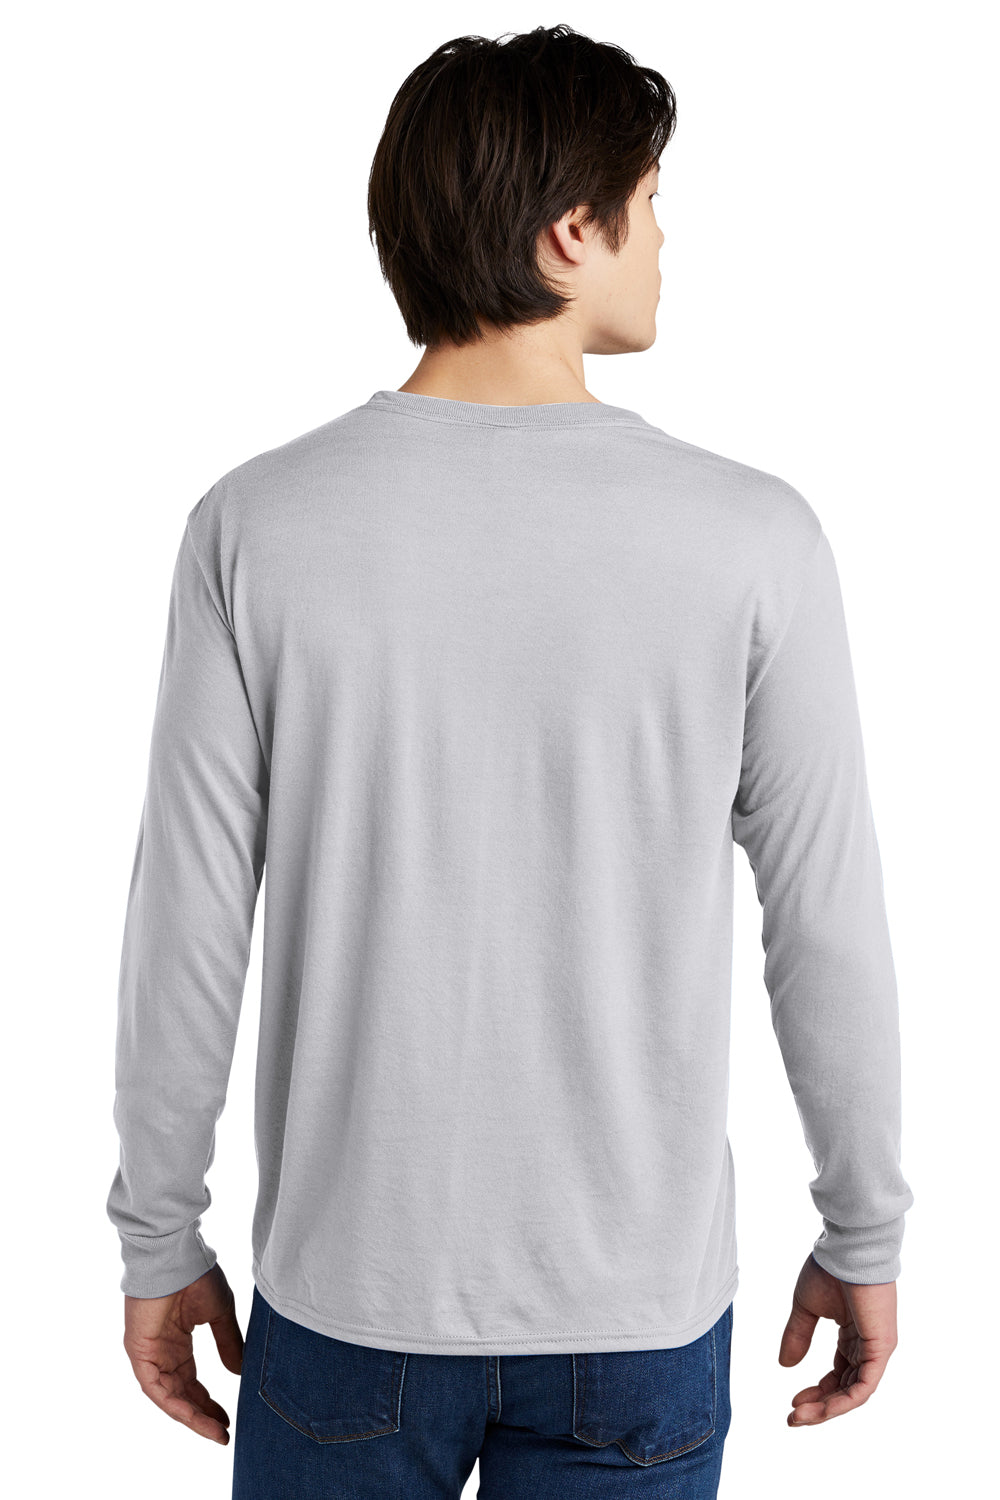 Jerzees 21LS Dri-Power Long Sleeve Crewneck T-Shirt Silver Grey Back